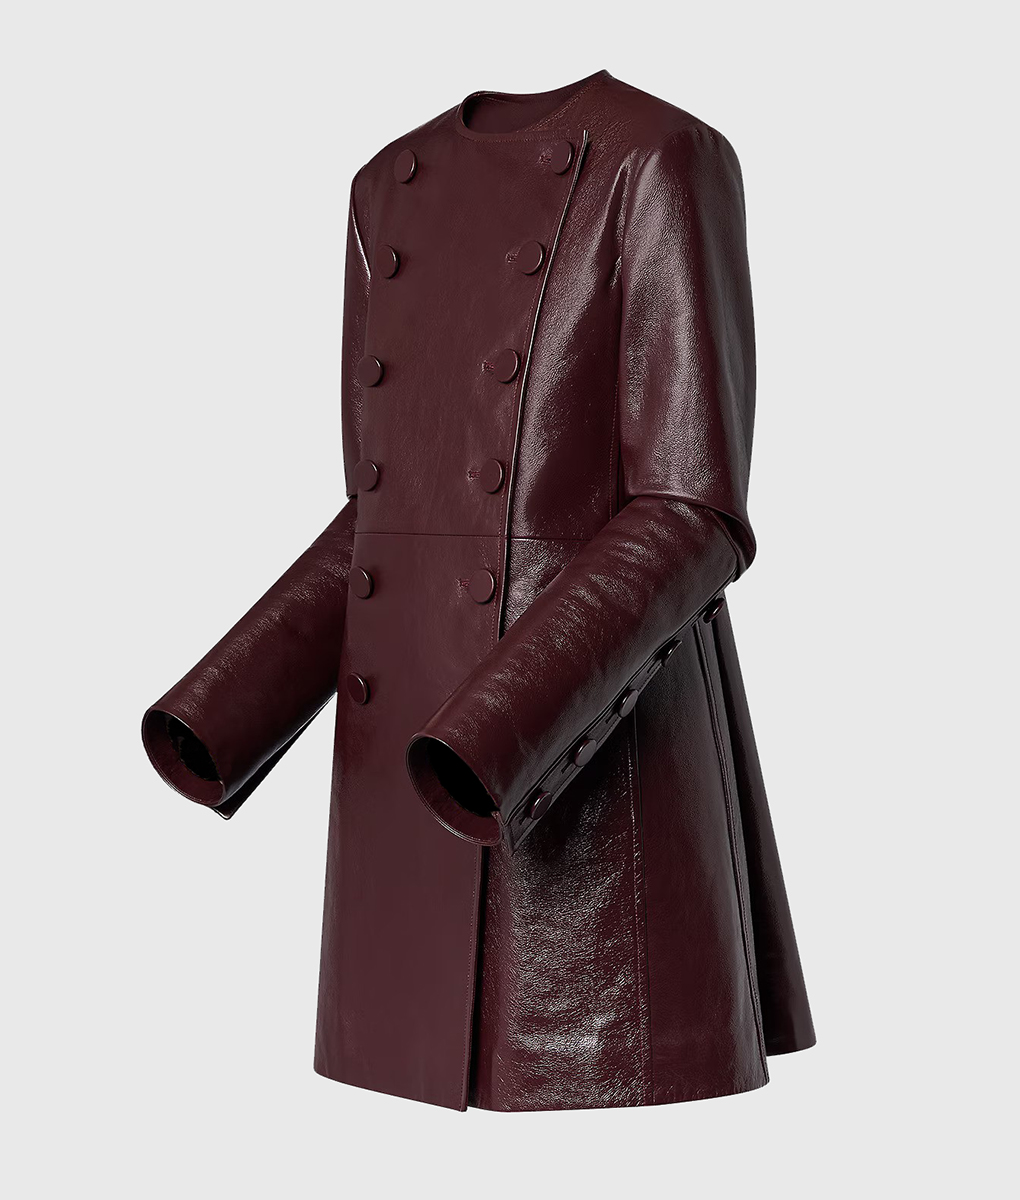 Hannah Einbinder Maroon Leather Coat (3)